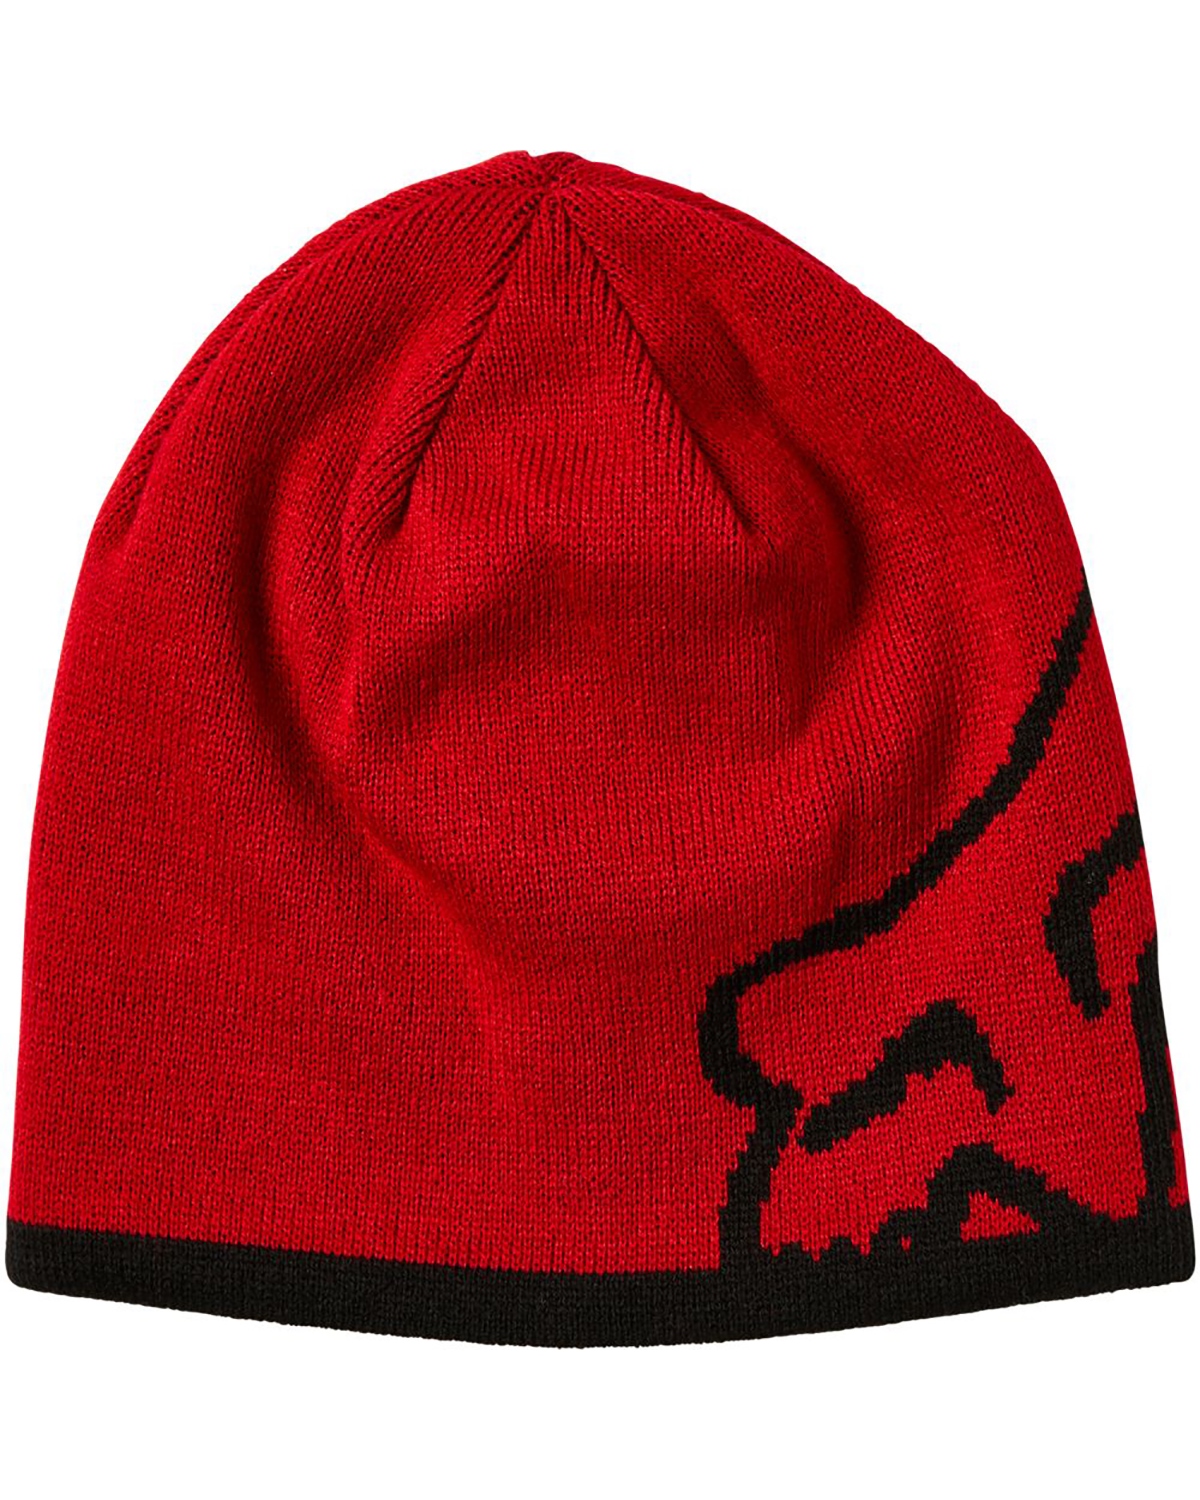 sticker plaque immatriculation bonnet rouge